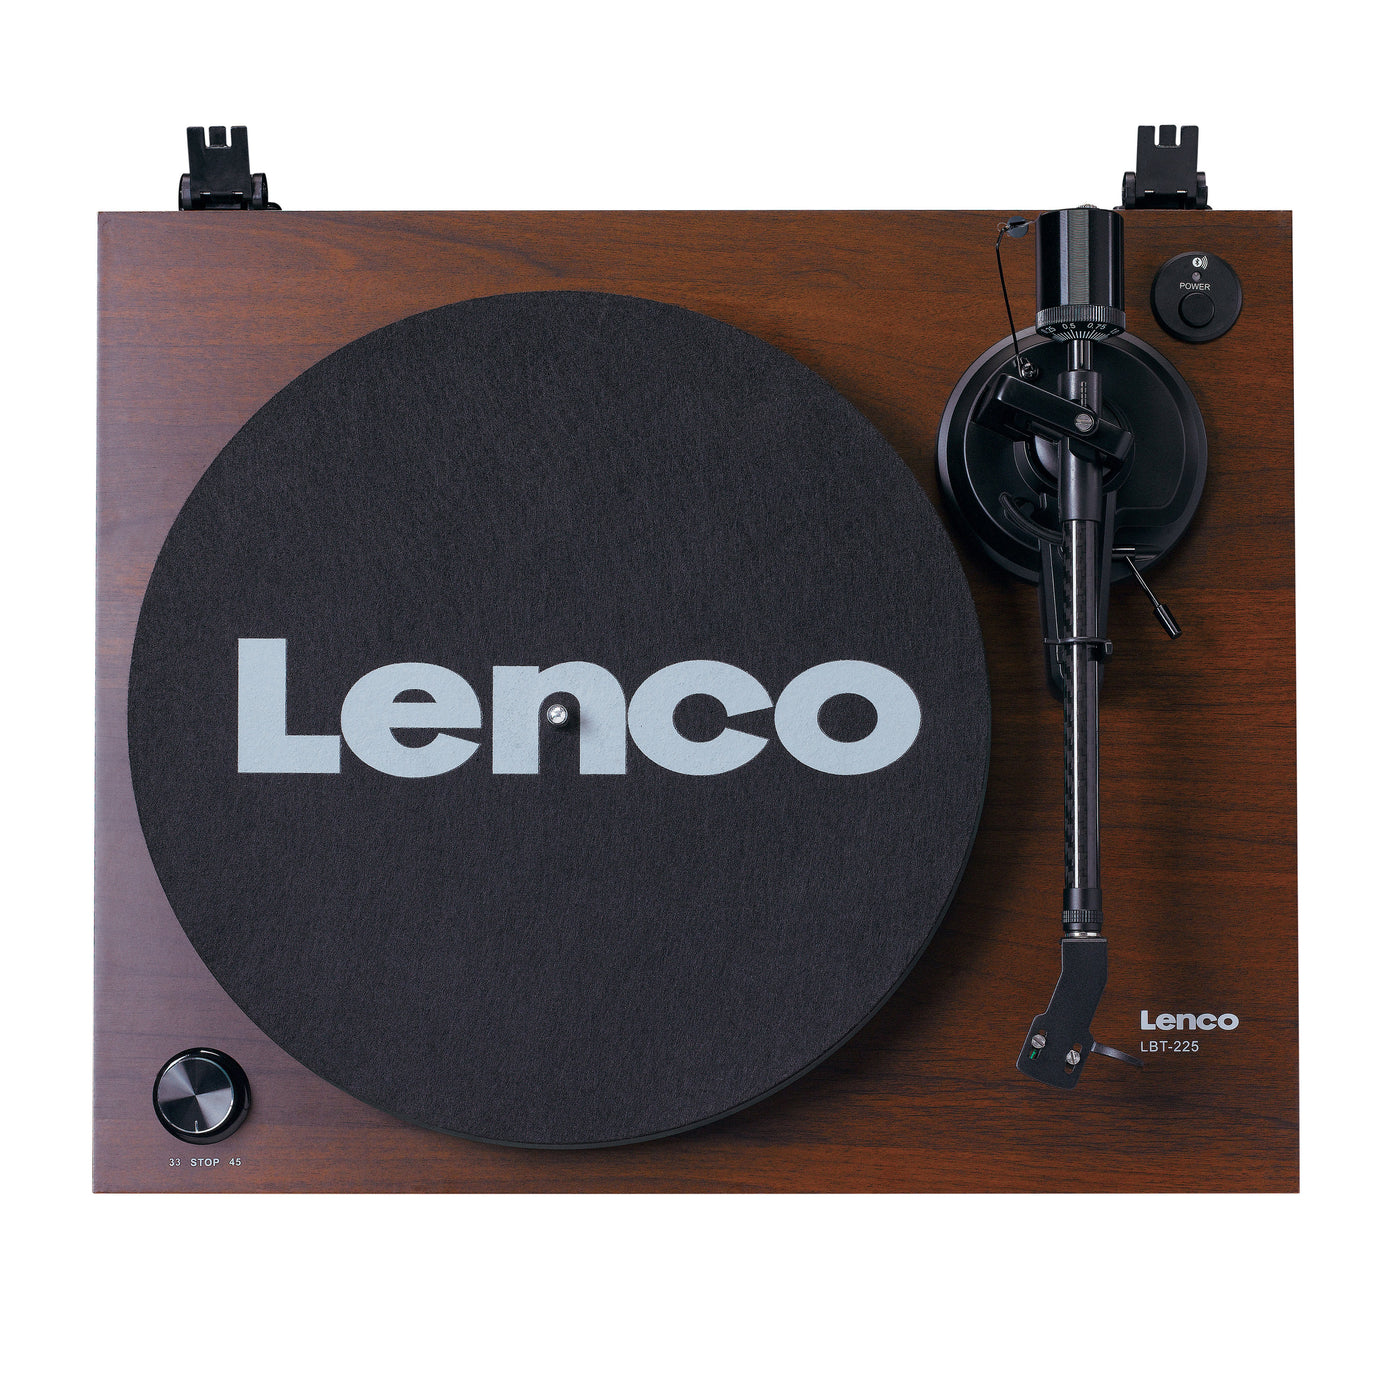 LENCO LBT-225WA - Platenspeler met Bluetooth® transmissie - Donkerbruin